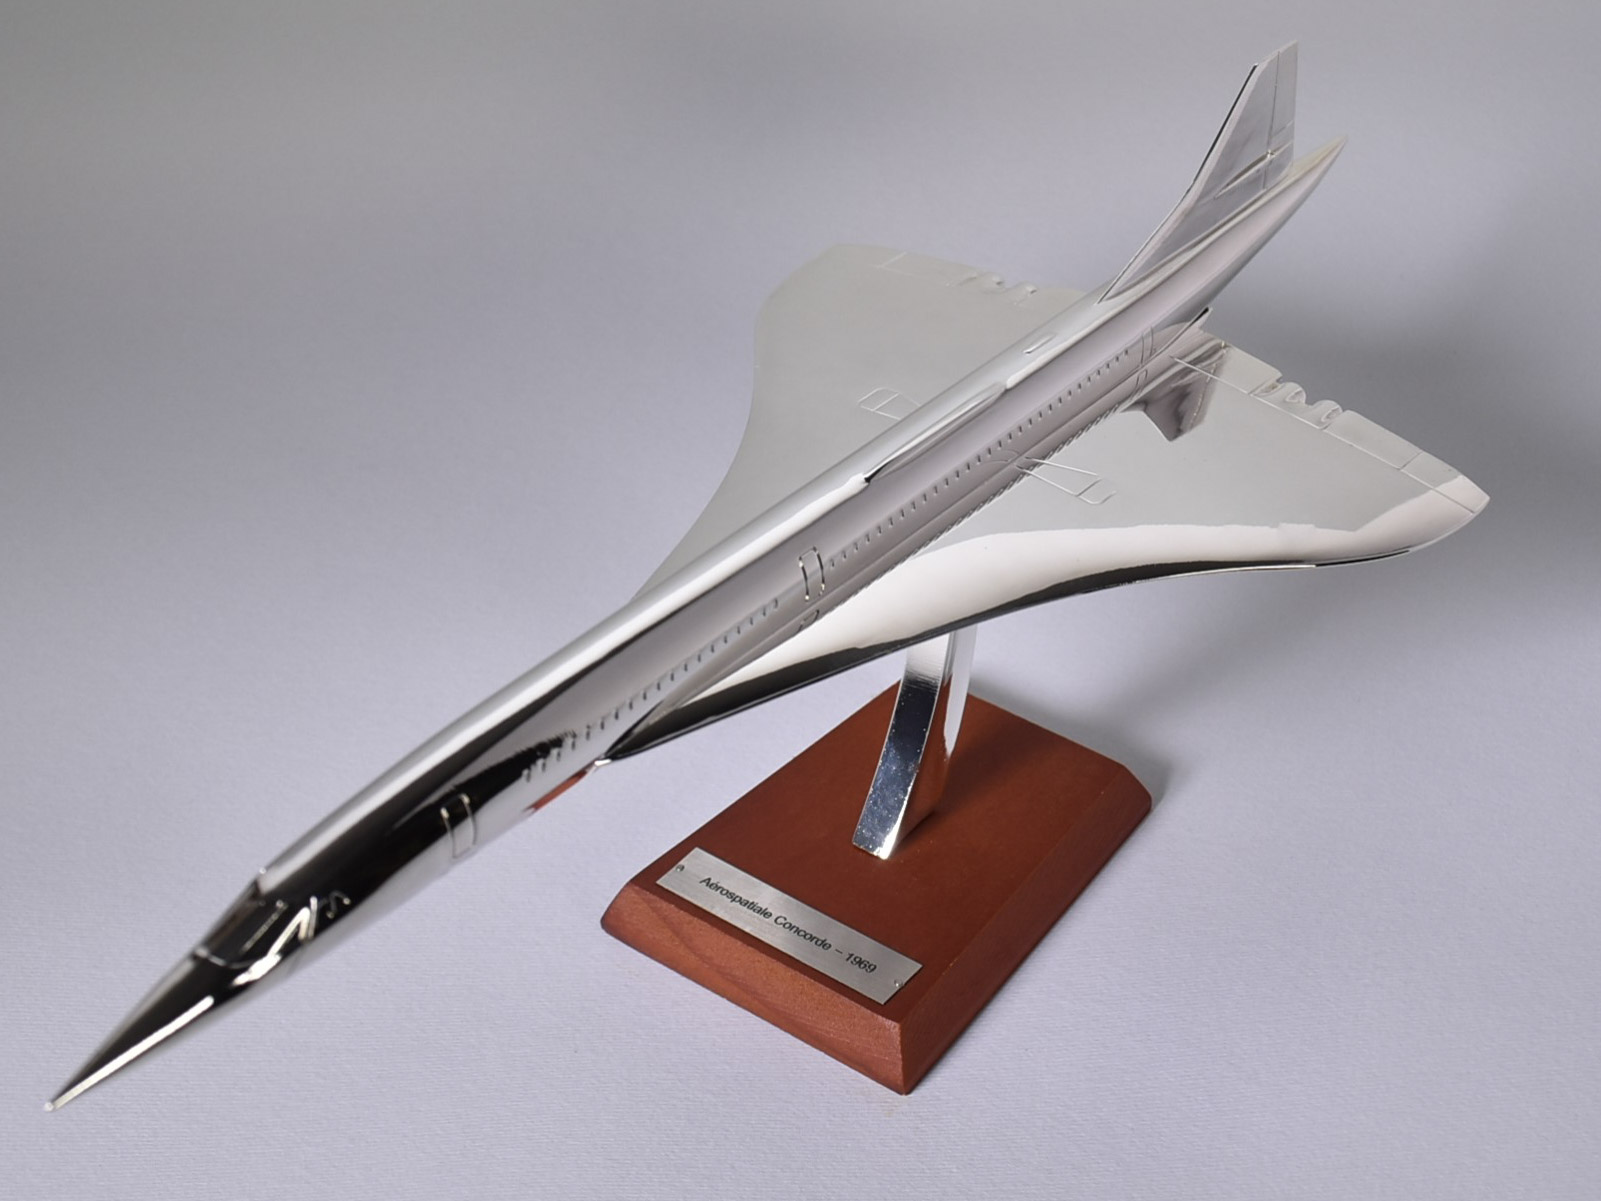 Aérospatiale Concorde - 1969 - Silver Classic certificate of authenticity